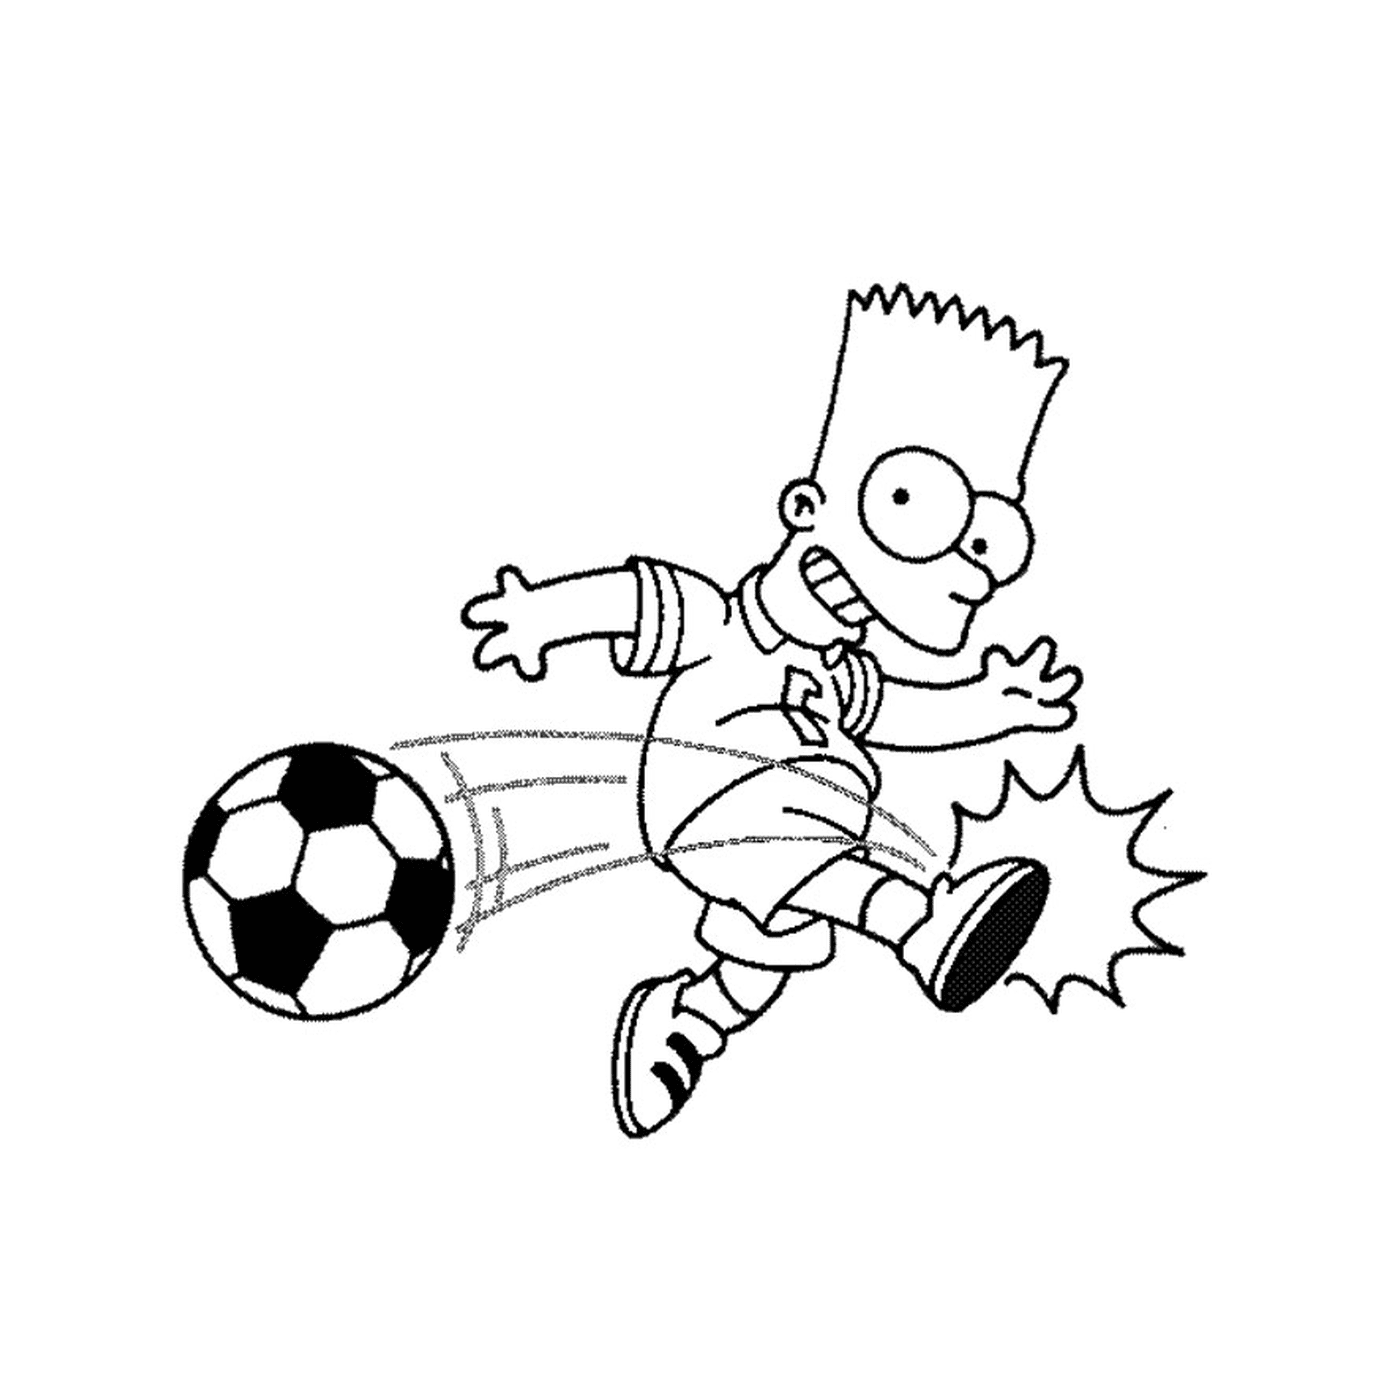  Os Simpsons jogam futebol 